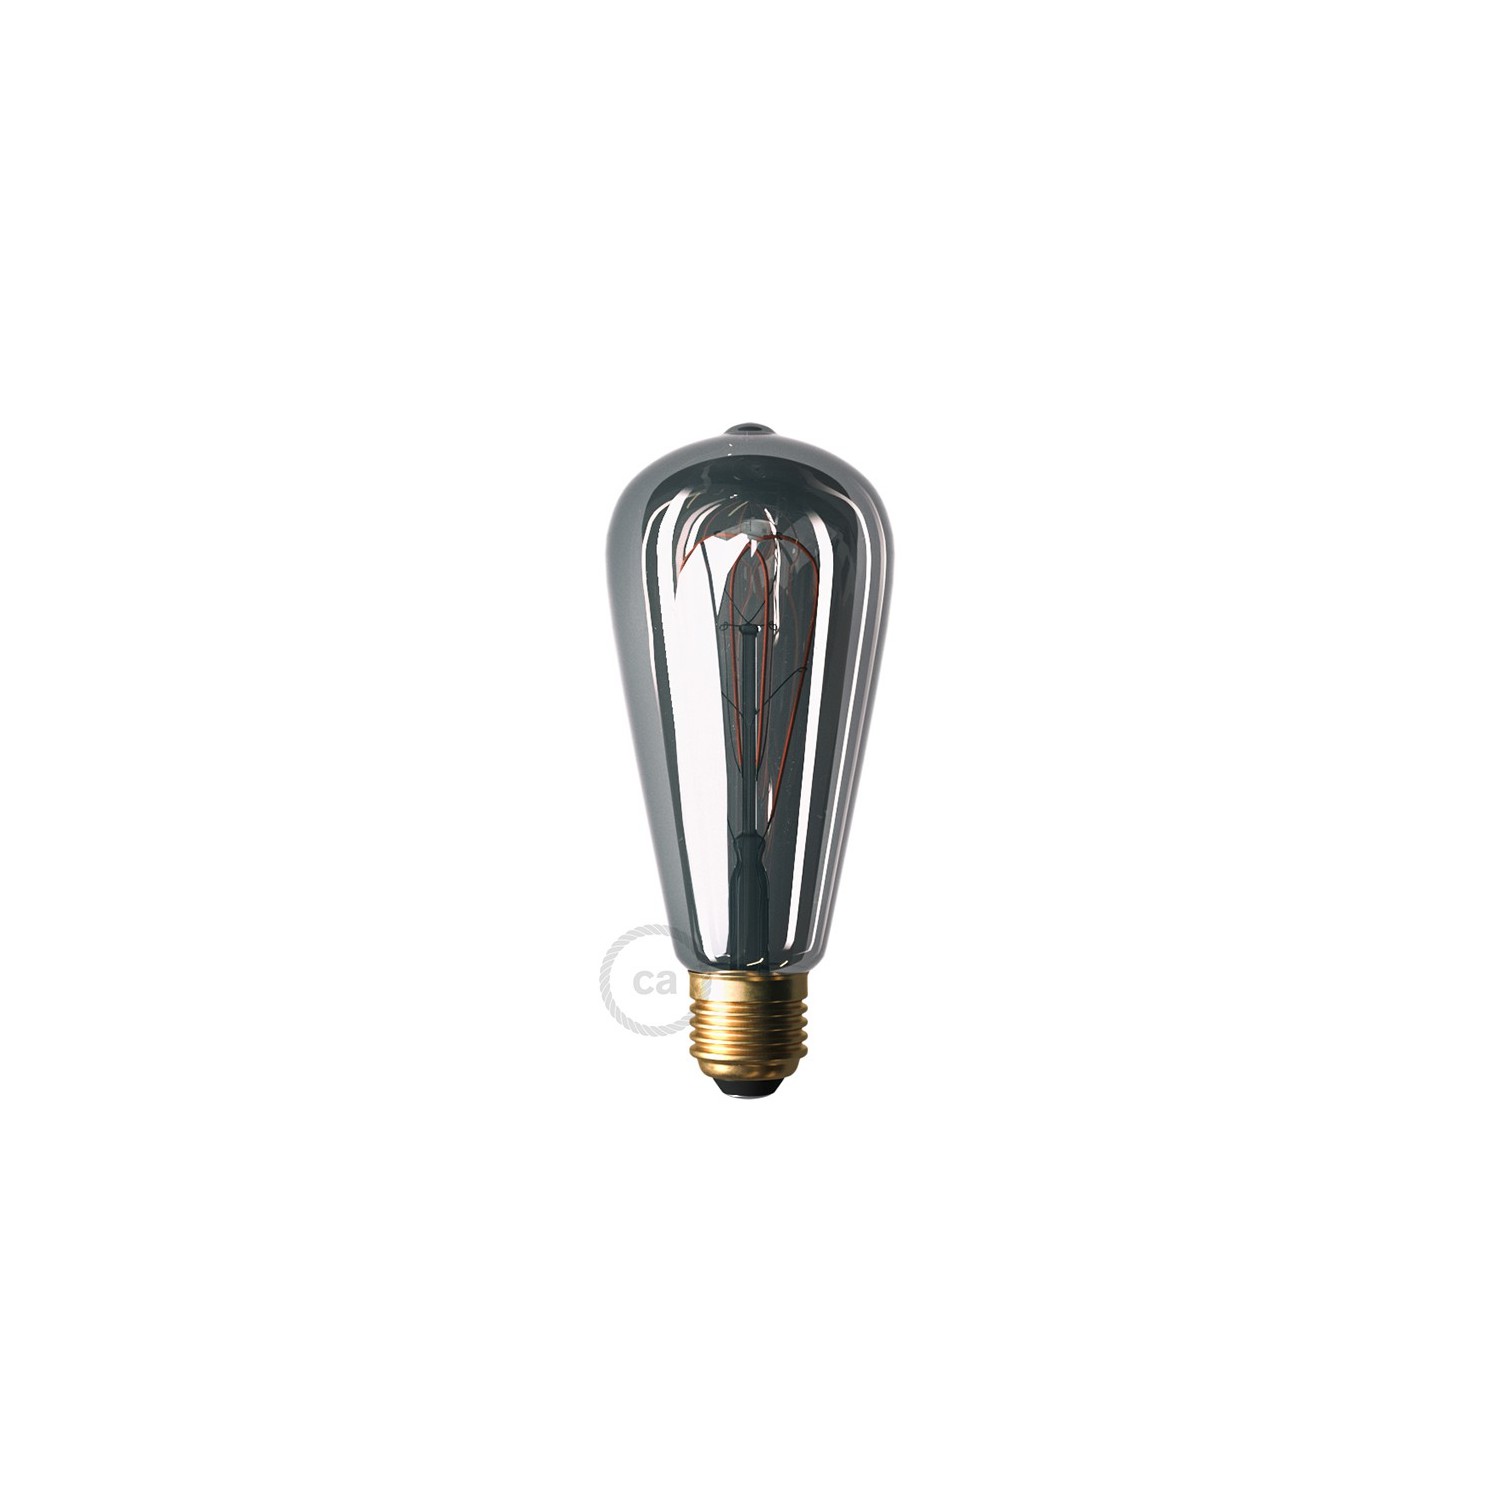 Lampadina Smoky LED Edison ST64 Filamento Curvo a Doppio Loop 5W E27 Dimmerabile 1800K